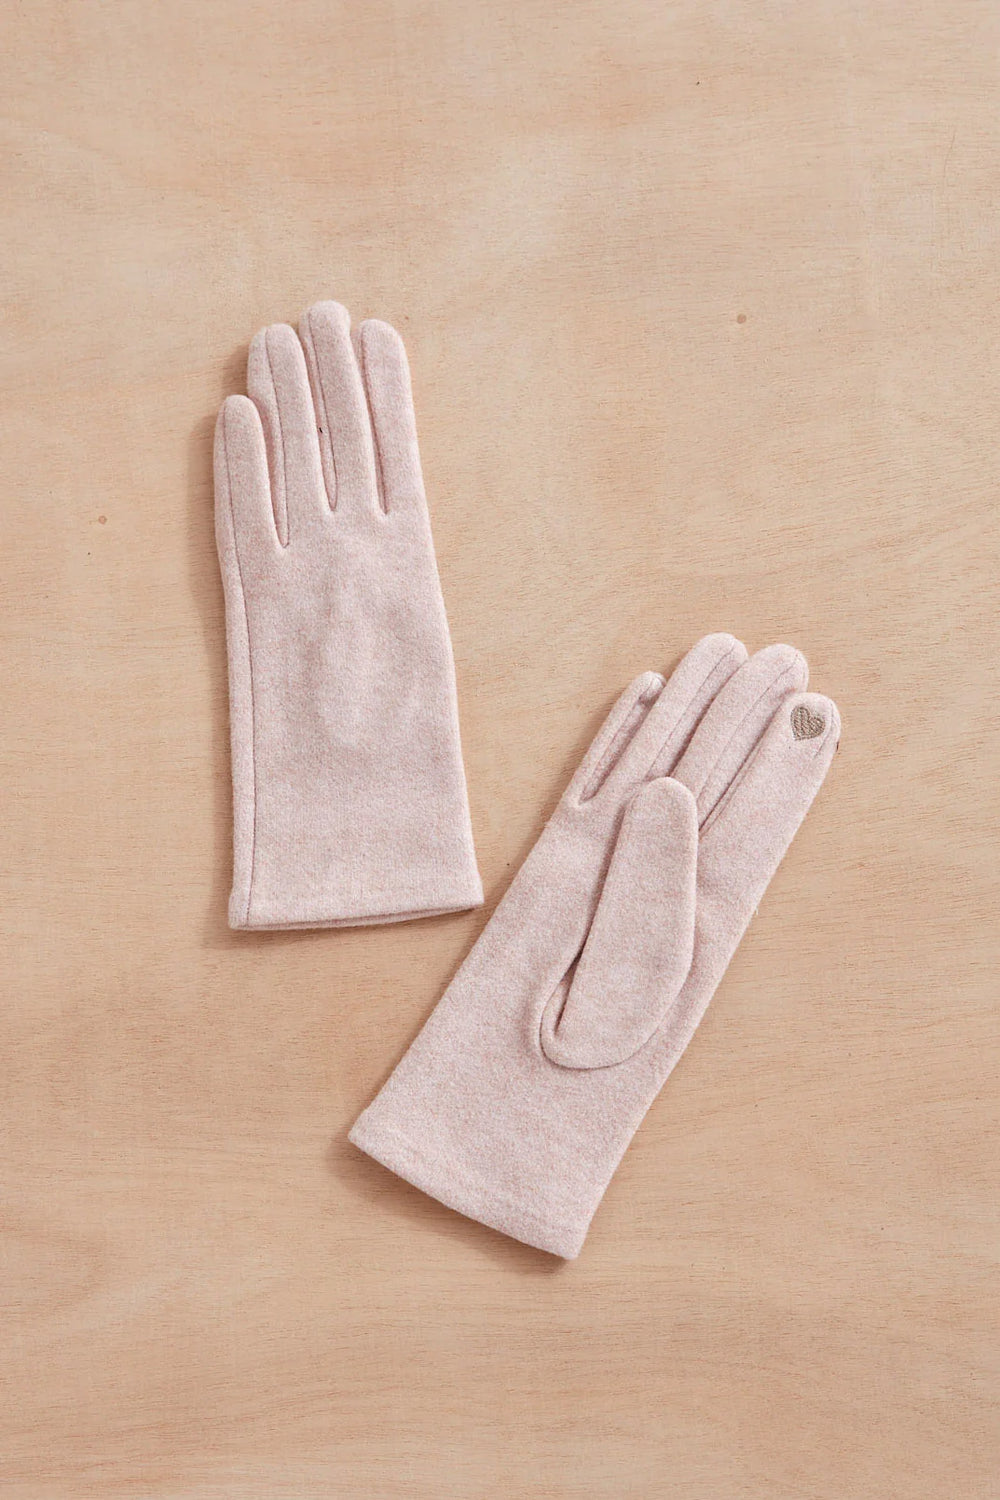 Shari Chic Plain Gloves in Blush - Madison&